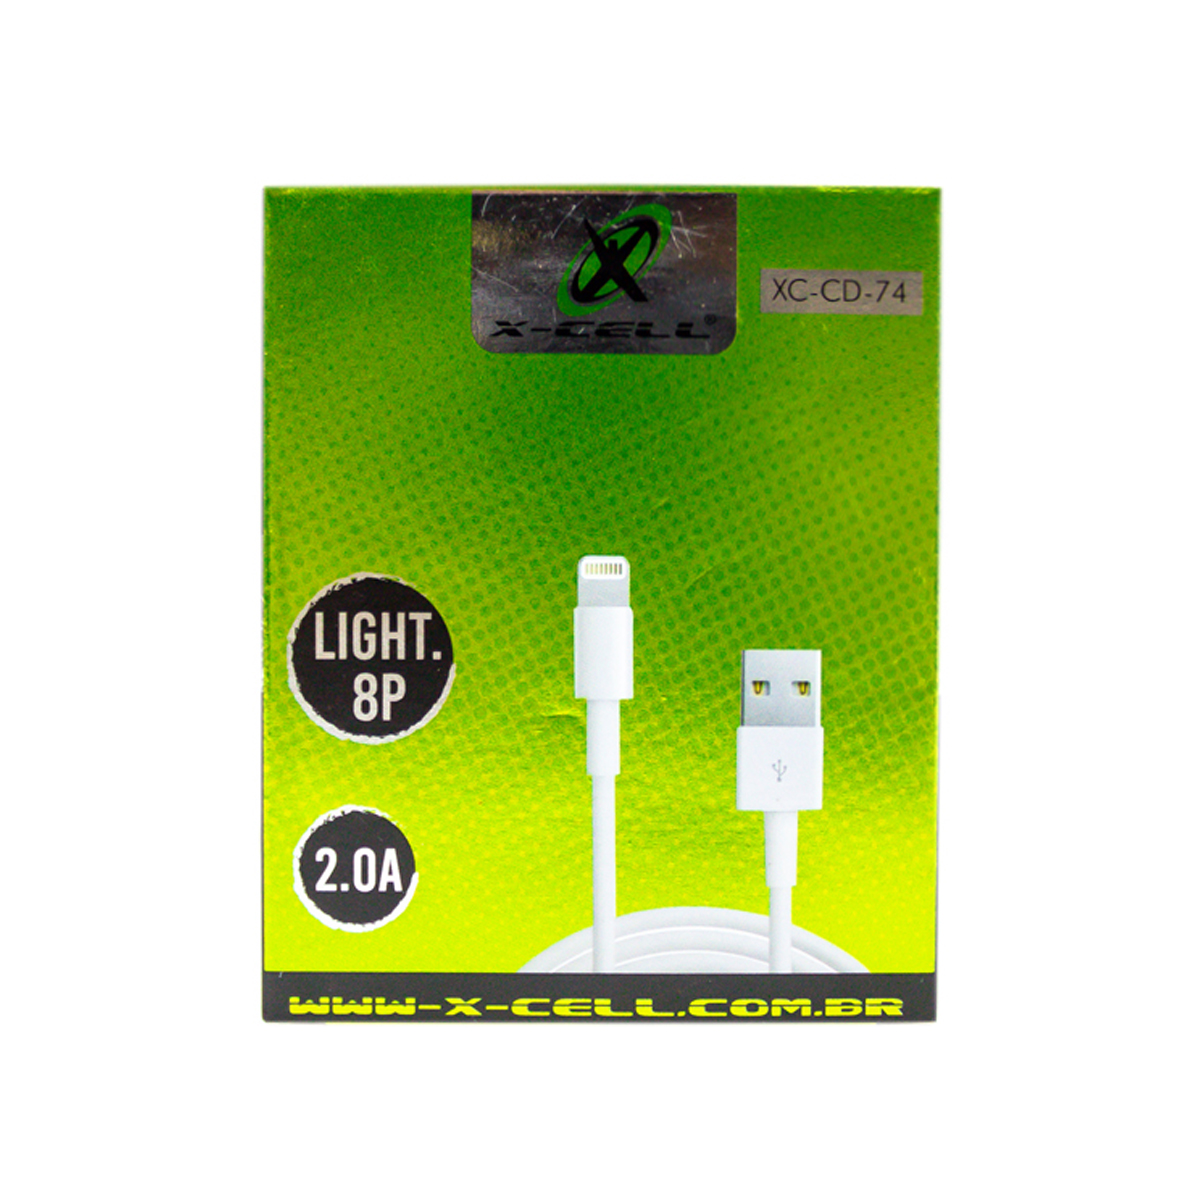 7898615159601 - CABO DE DADOS USB LIGHT 8P 2.0A 1.0M XC-CD-74 COMERCIAL BELLA